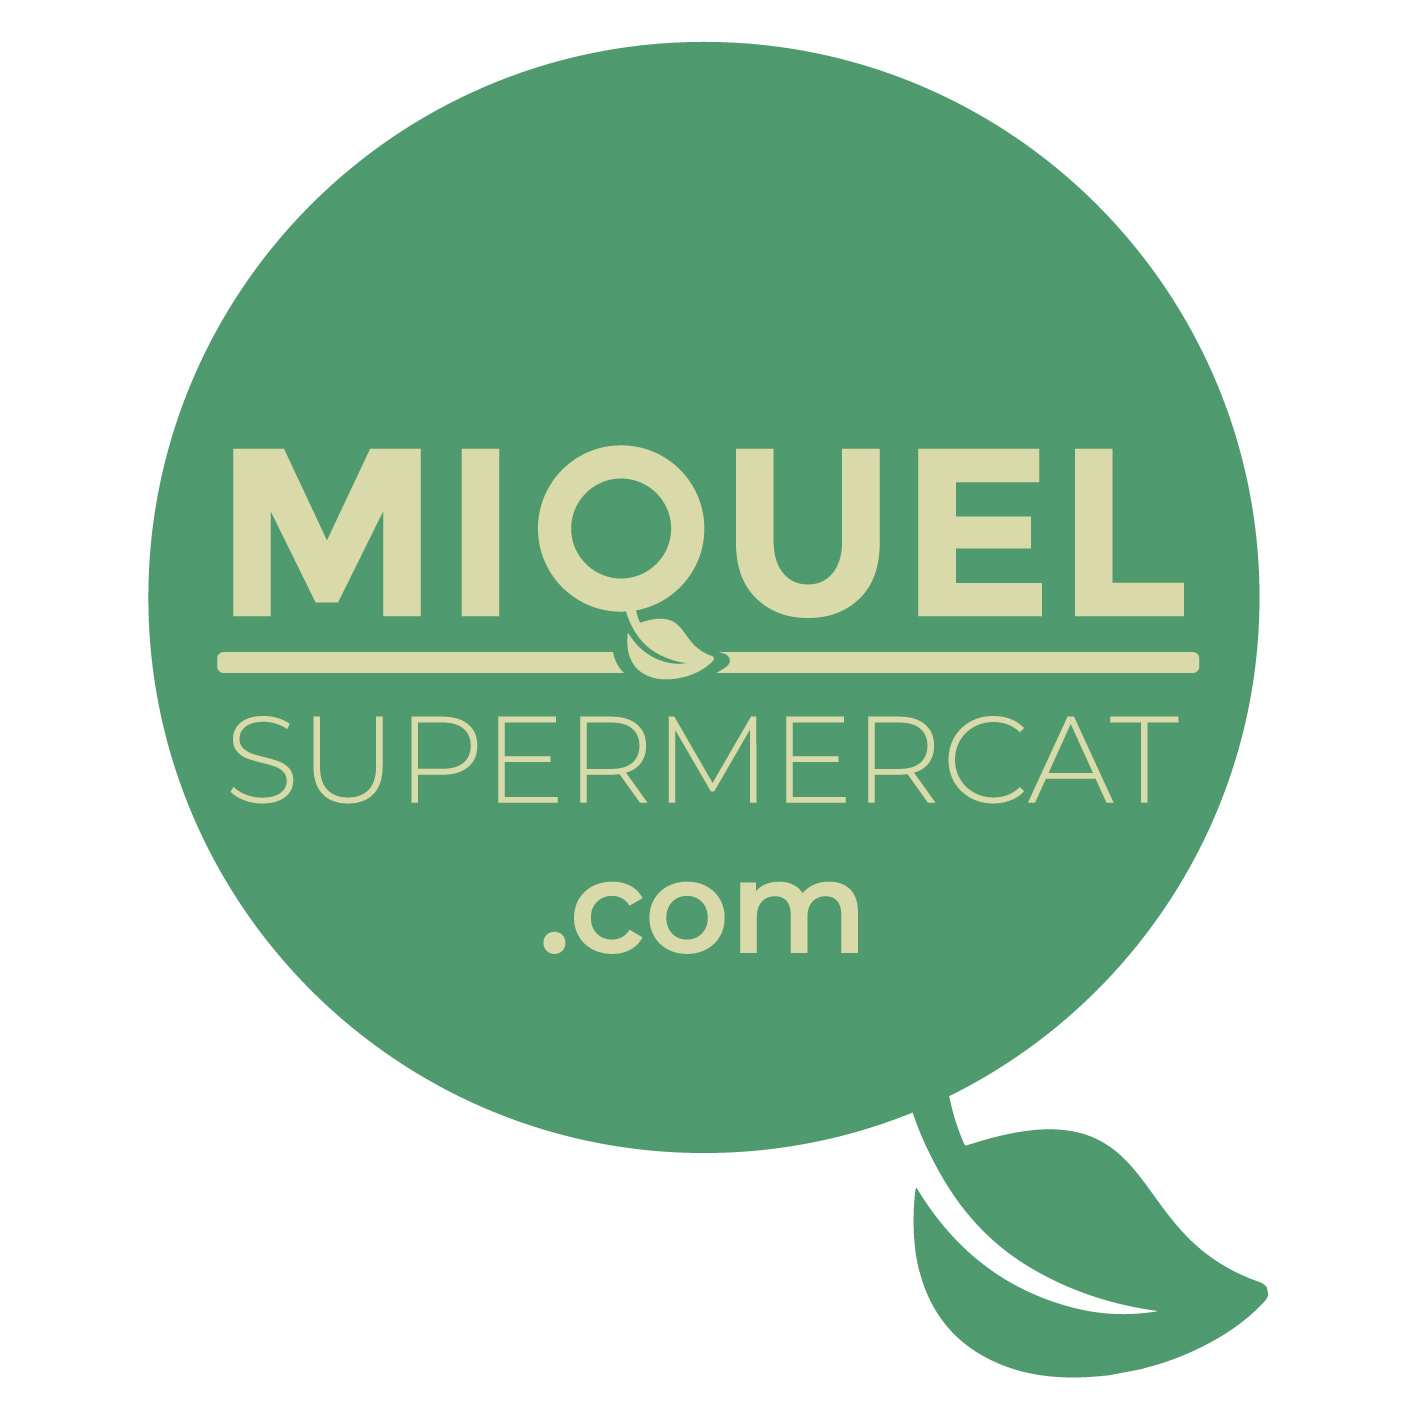 Miquel Supermercat